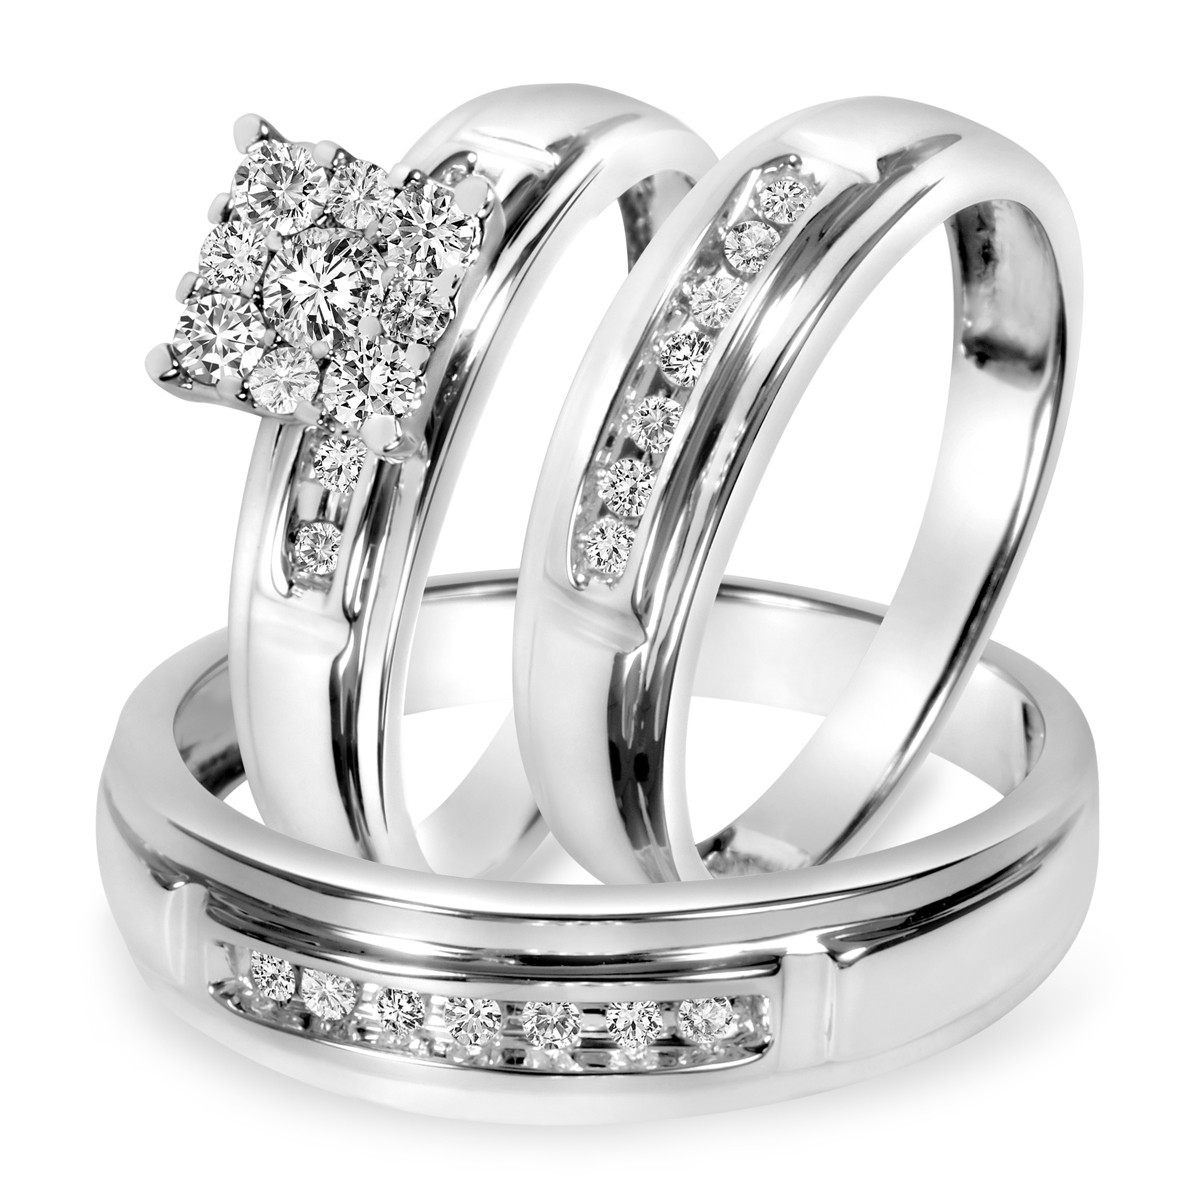 Wedding Band Sets White Gold
 1 2 CT T W Diamond Trio Matching Wedding Ring Set 10K